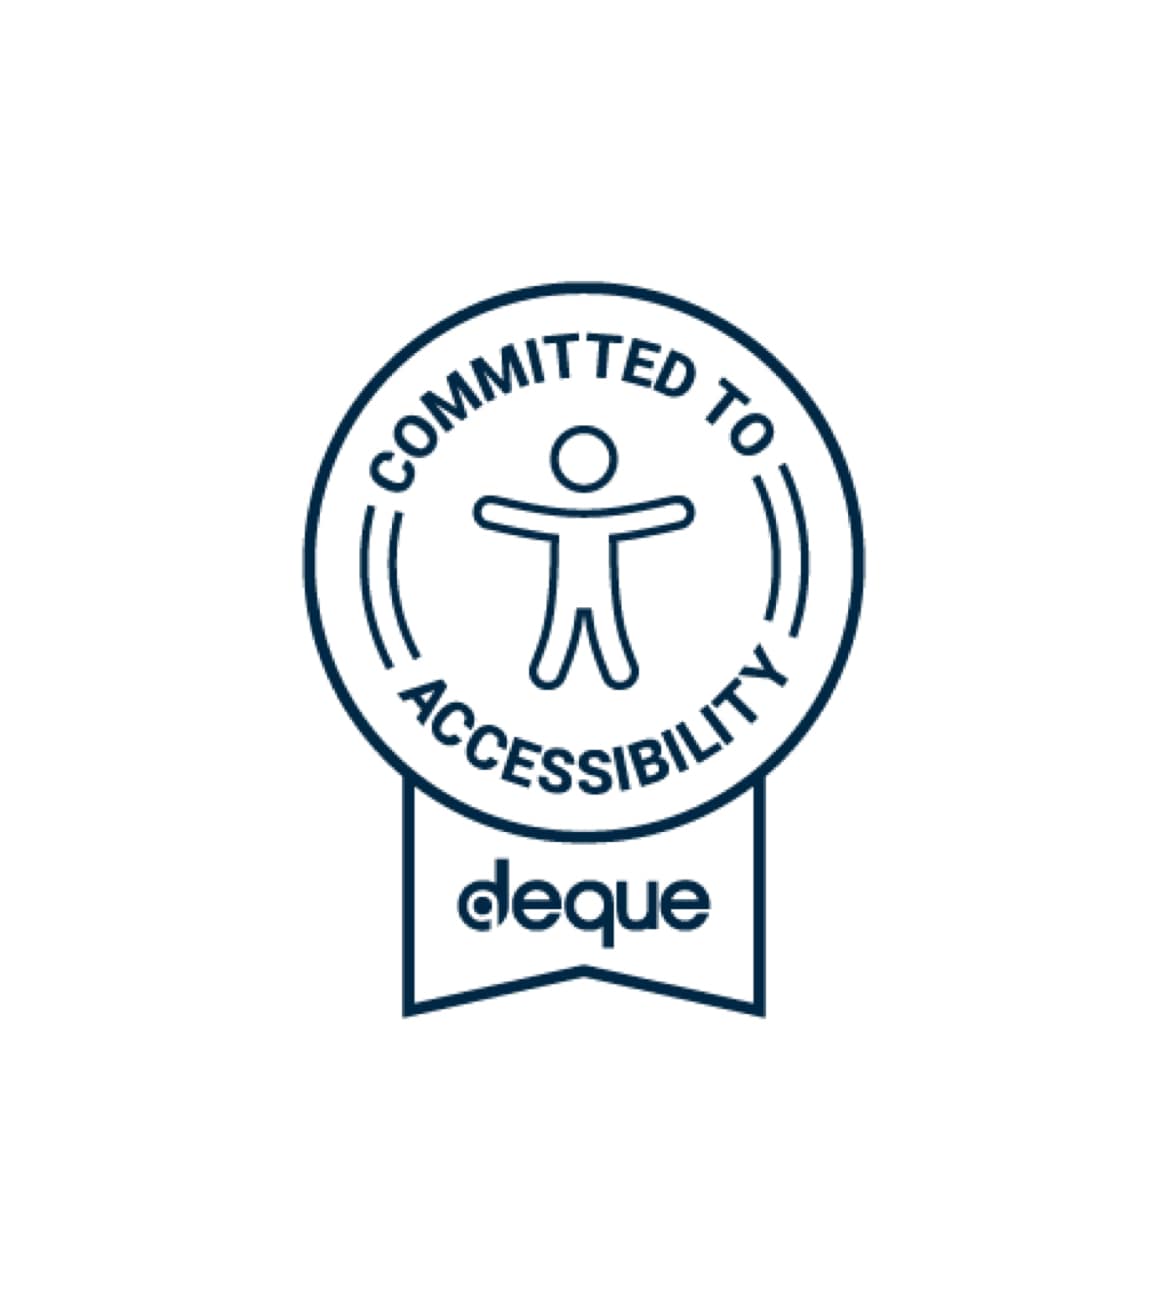 Deque accessibility logo